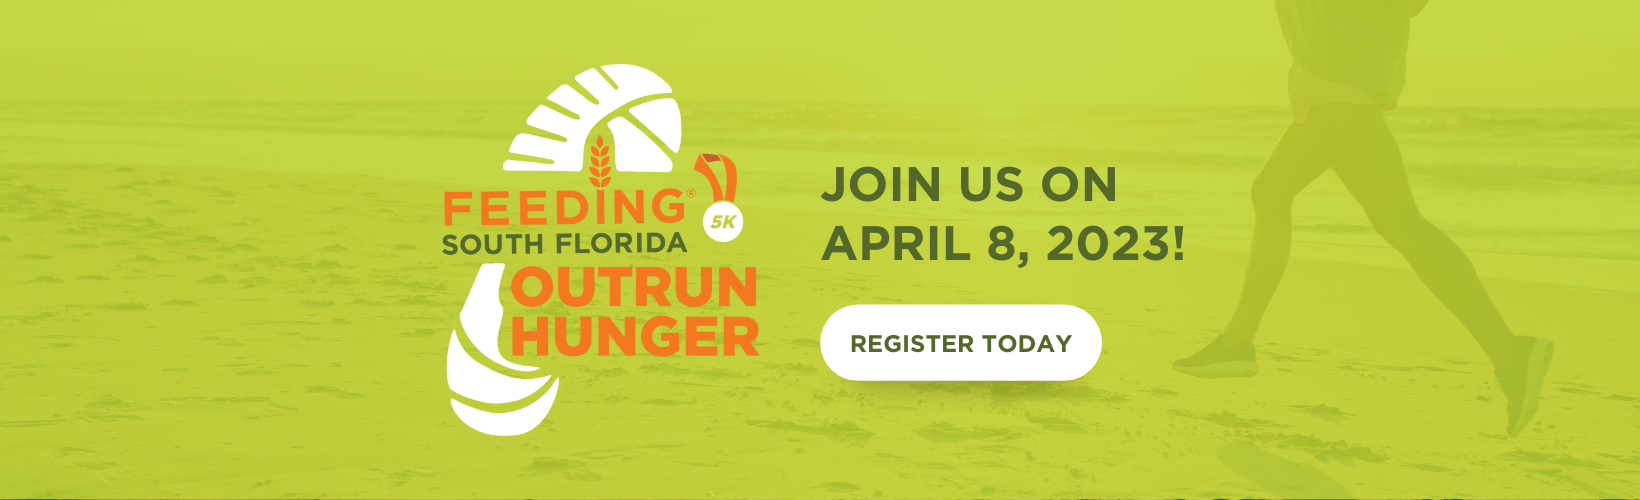 Feeding South Florida's outrun hunger 5k in april 2023